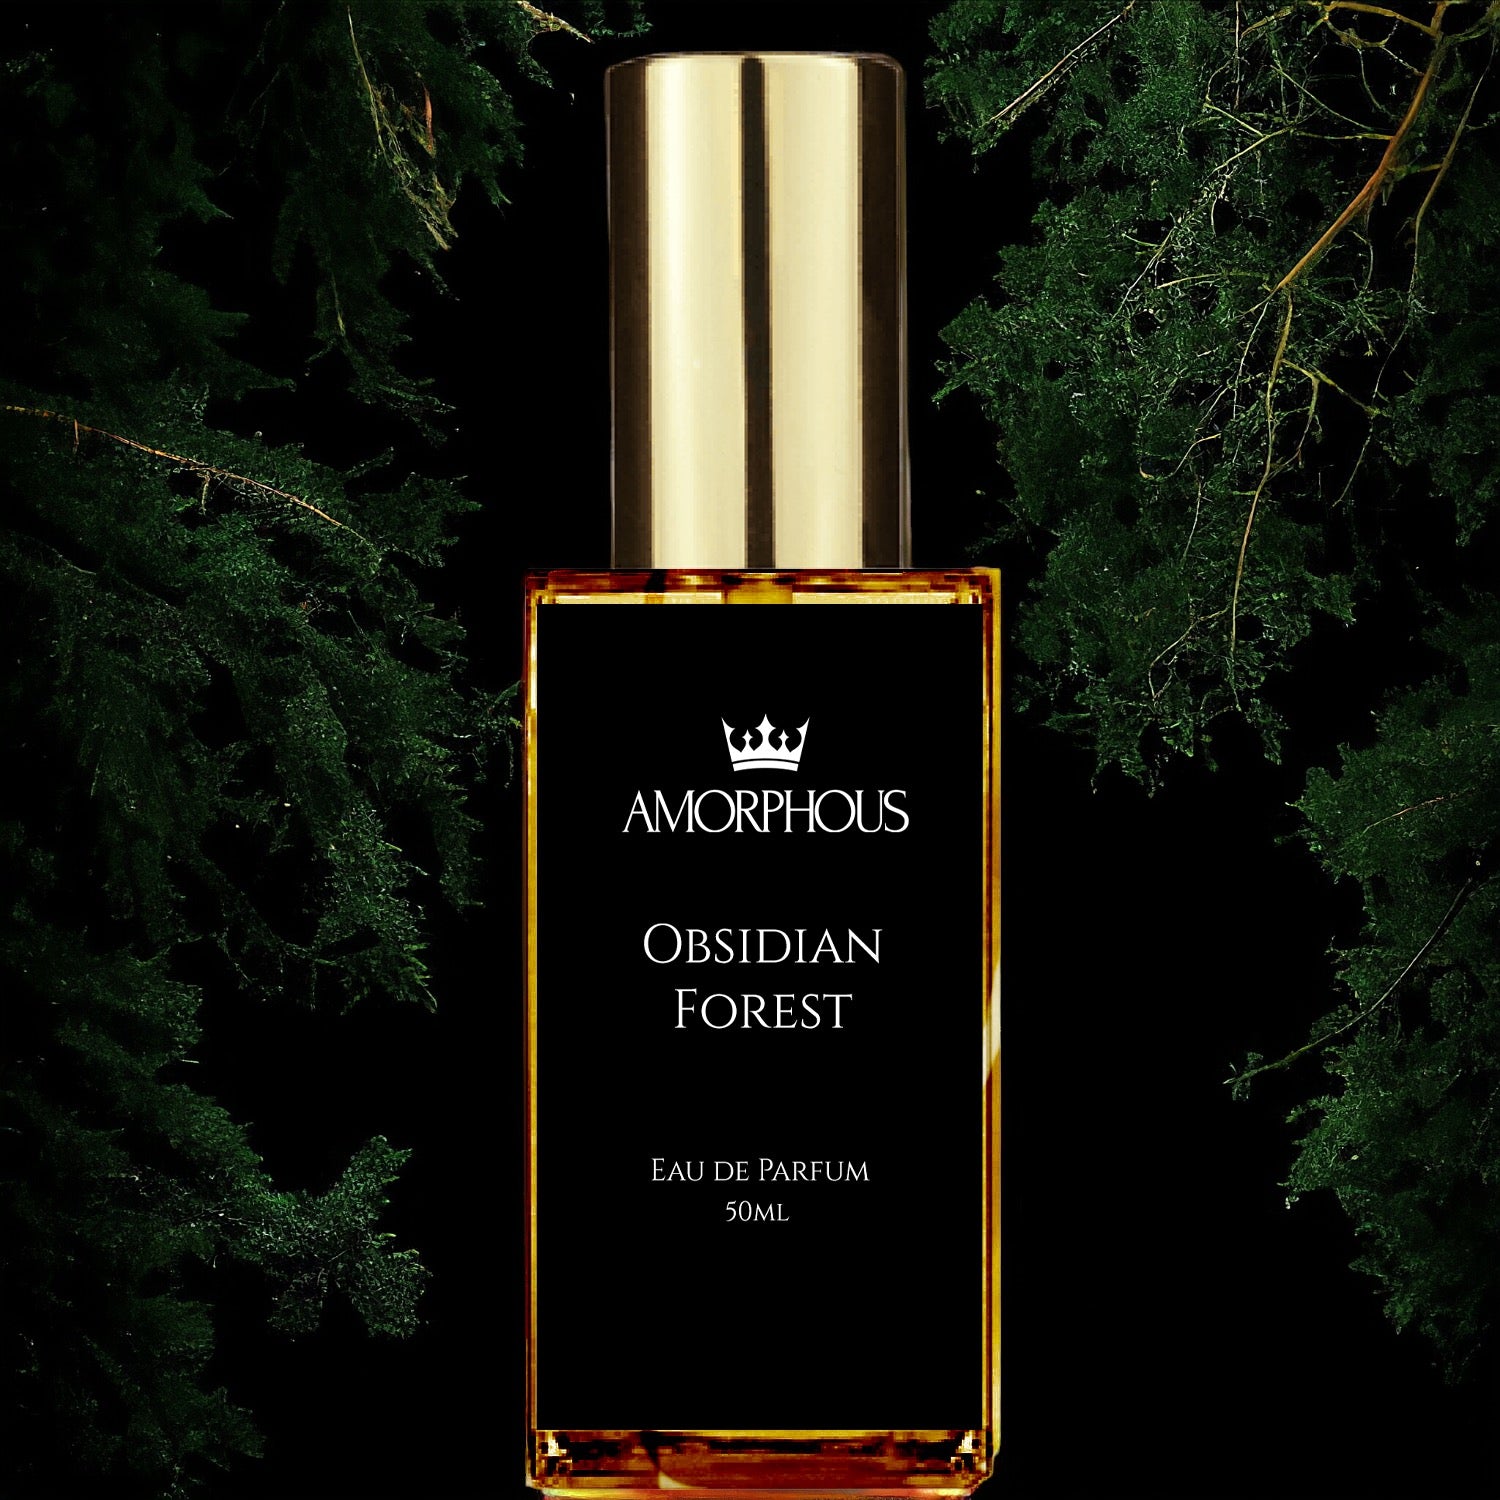 Obsidian forest fragrance